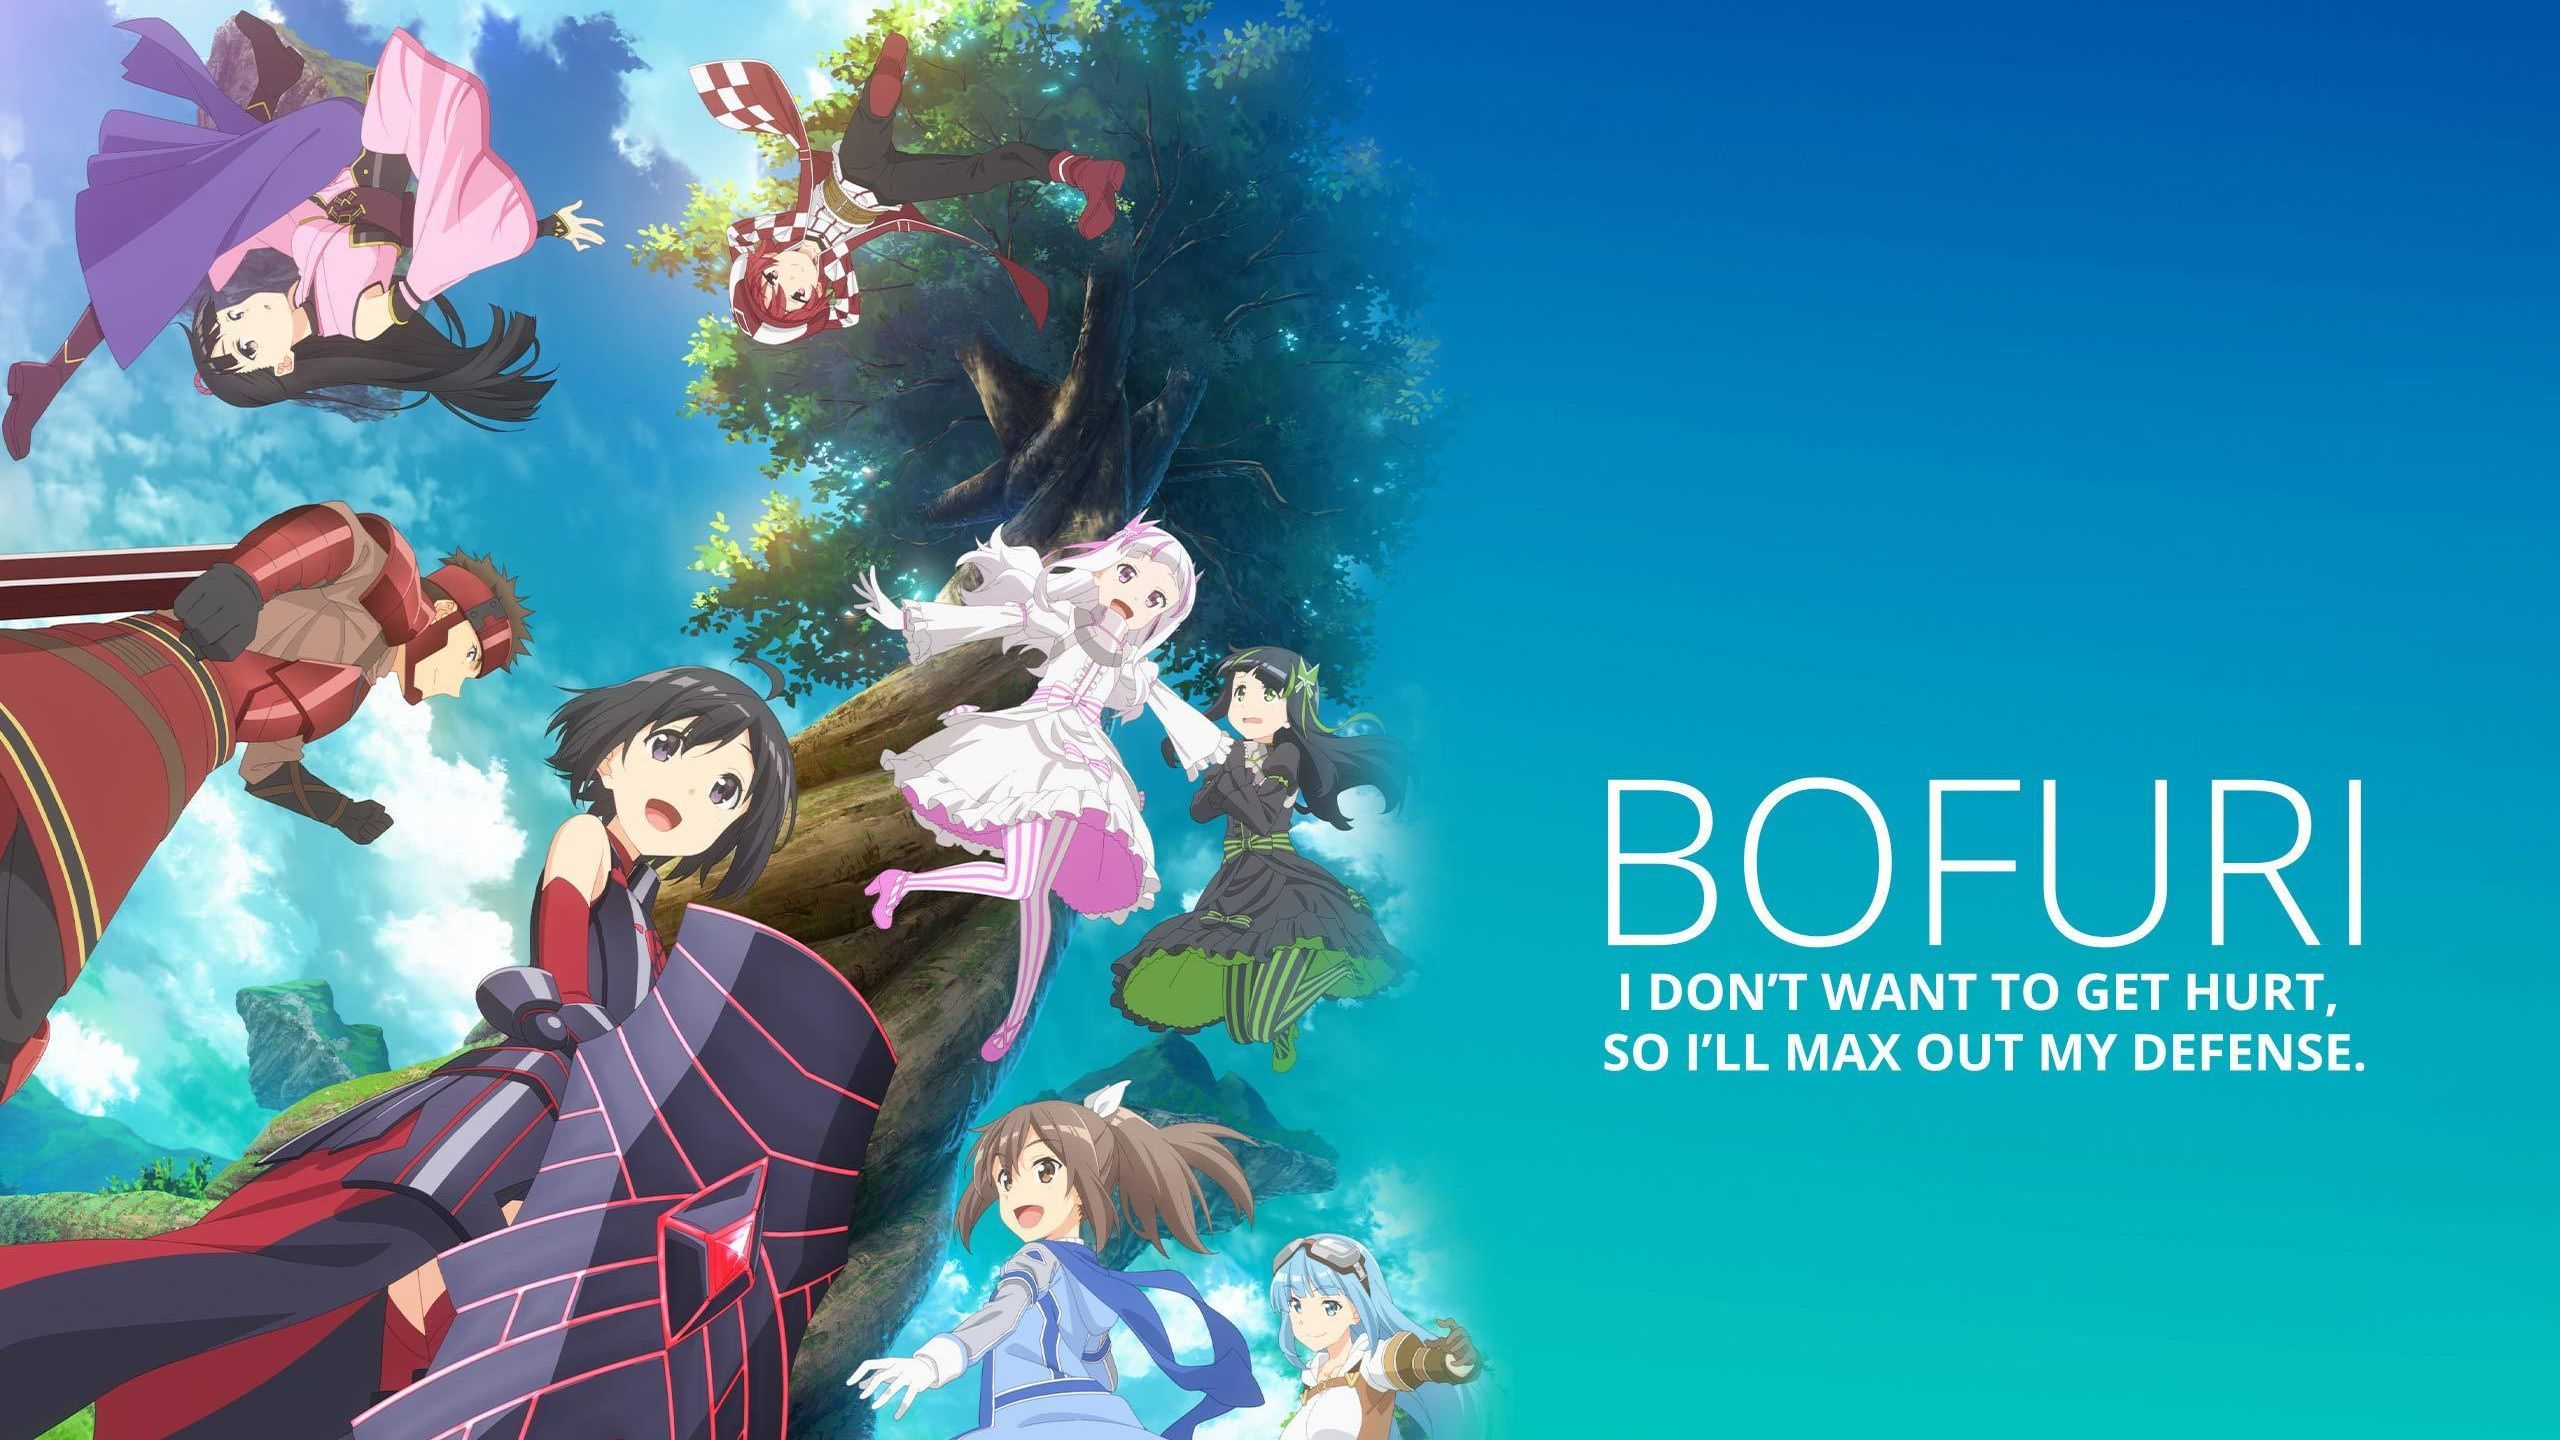 Bofuri anime season 2 episodes get delayed once again